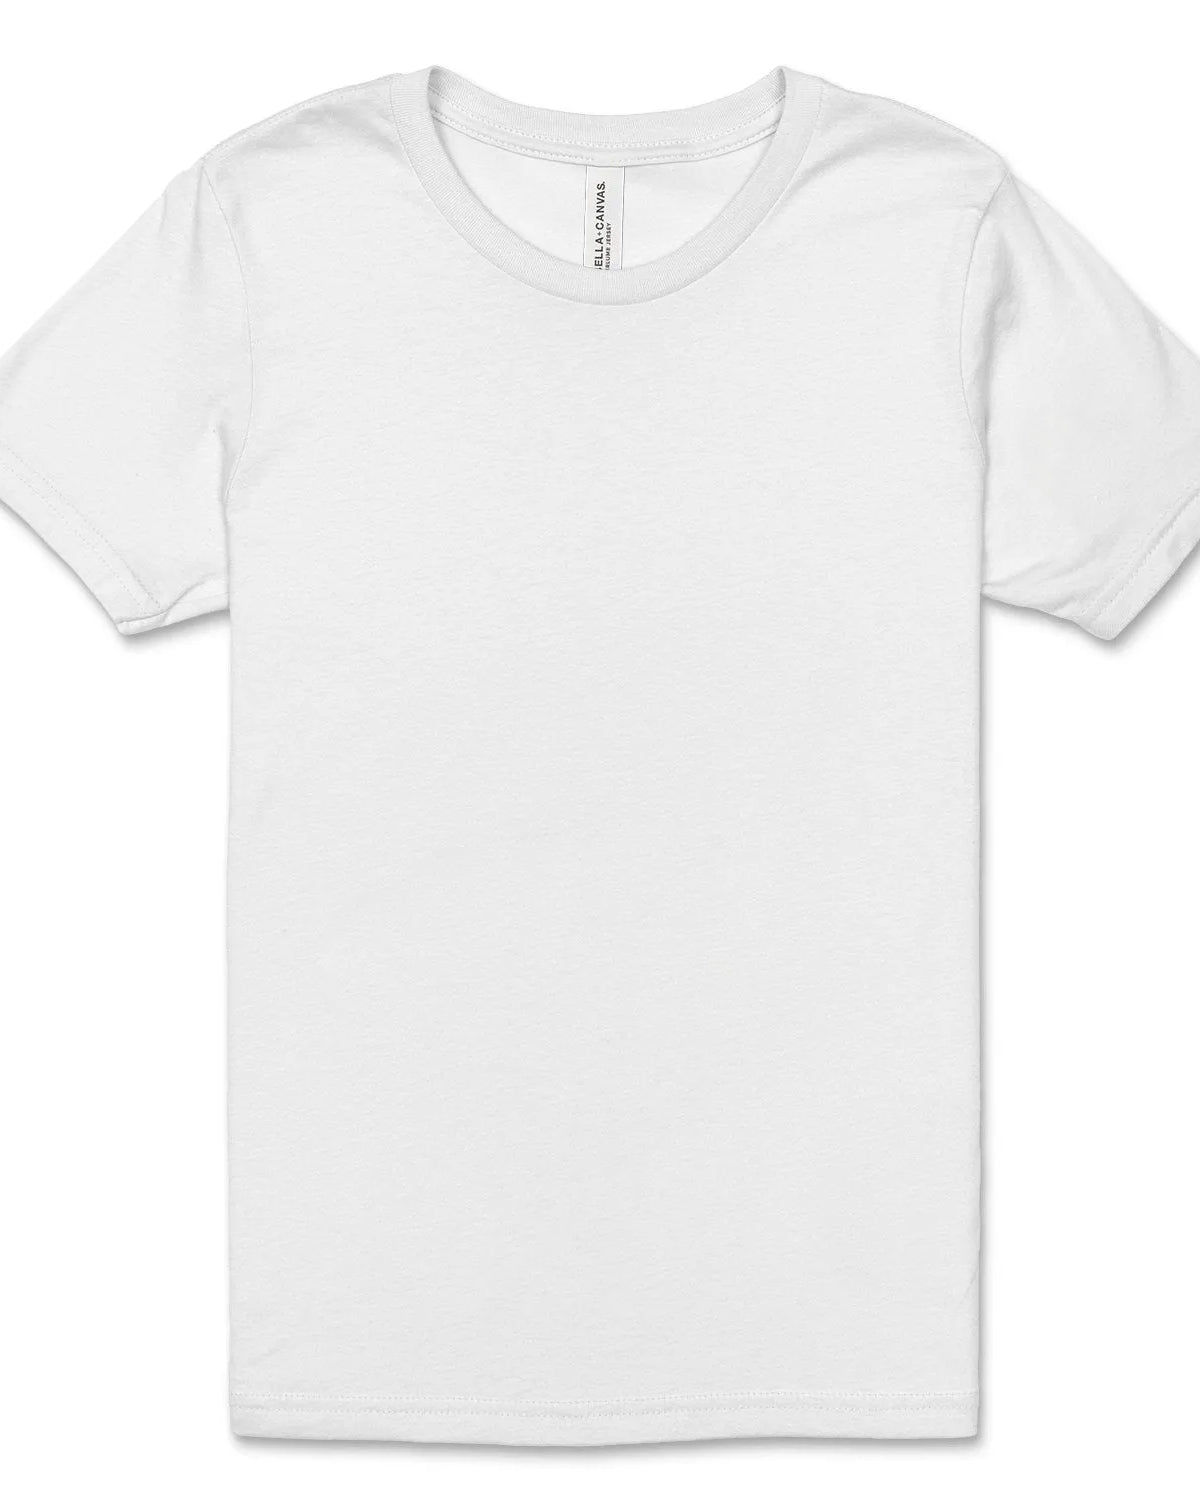 Unisex Jersey Tee - 3001Y - Print Me Shirts